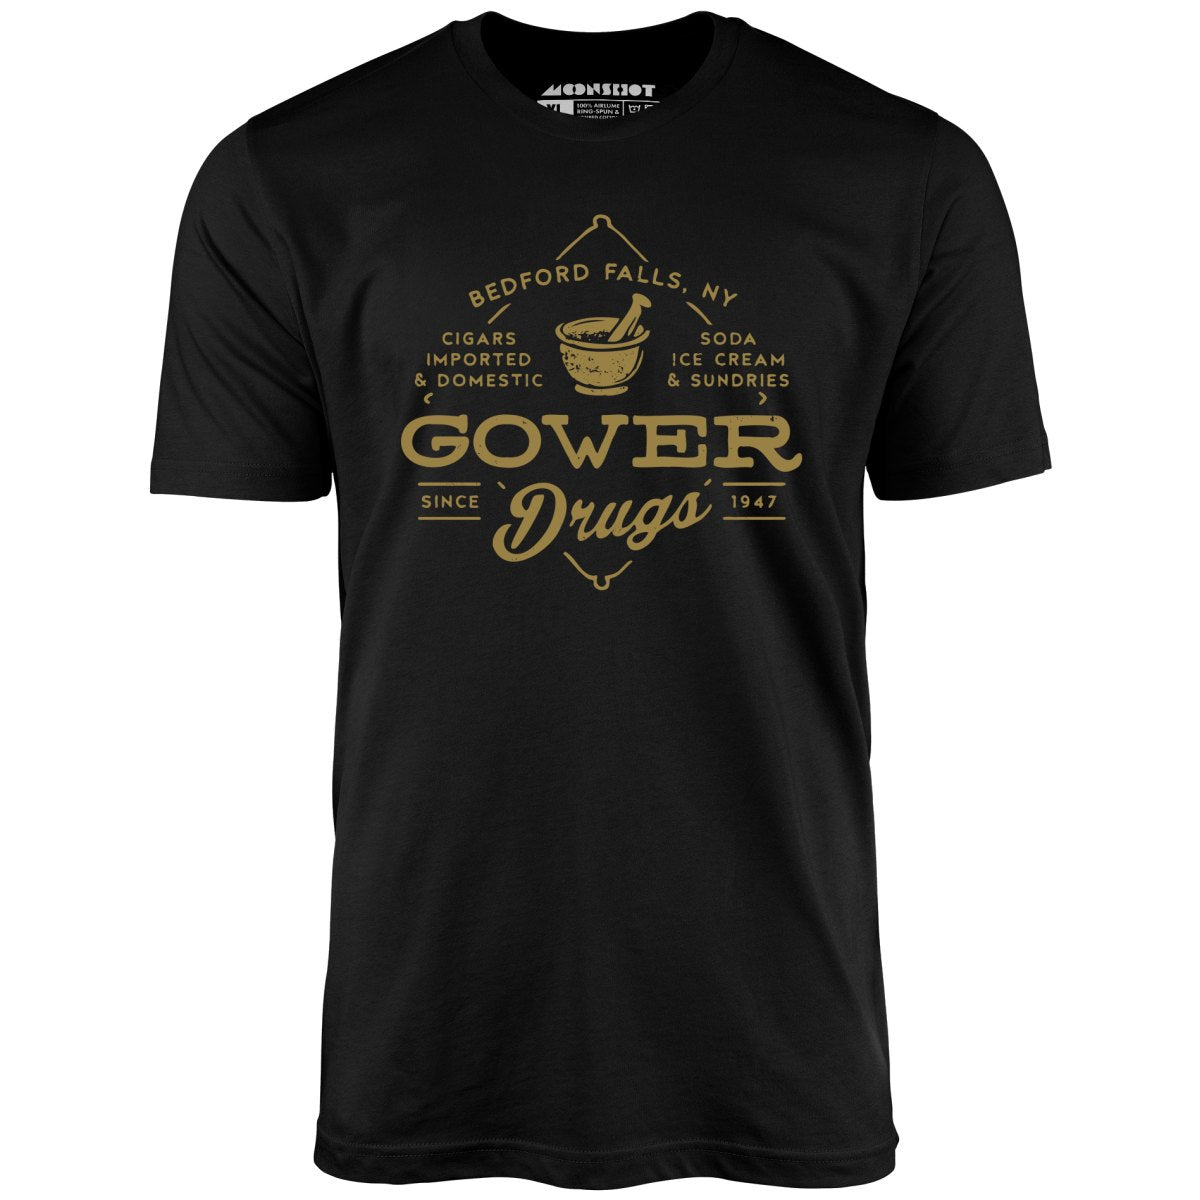 Gower Drugs - Bedford Falls, NY - Unisex T-Shirt